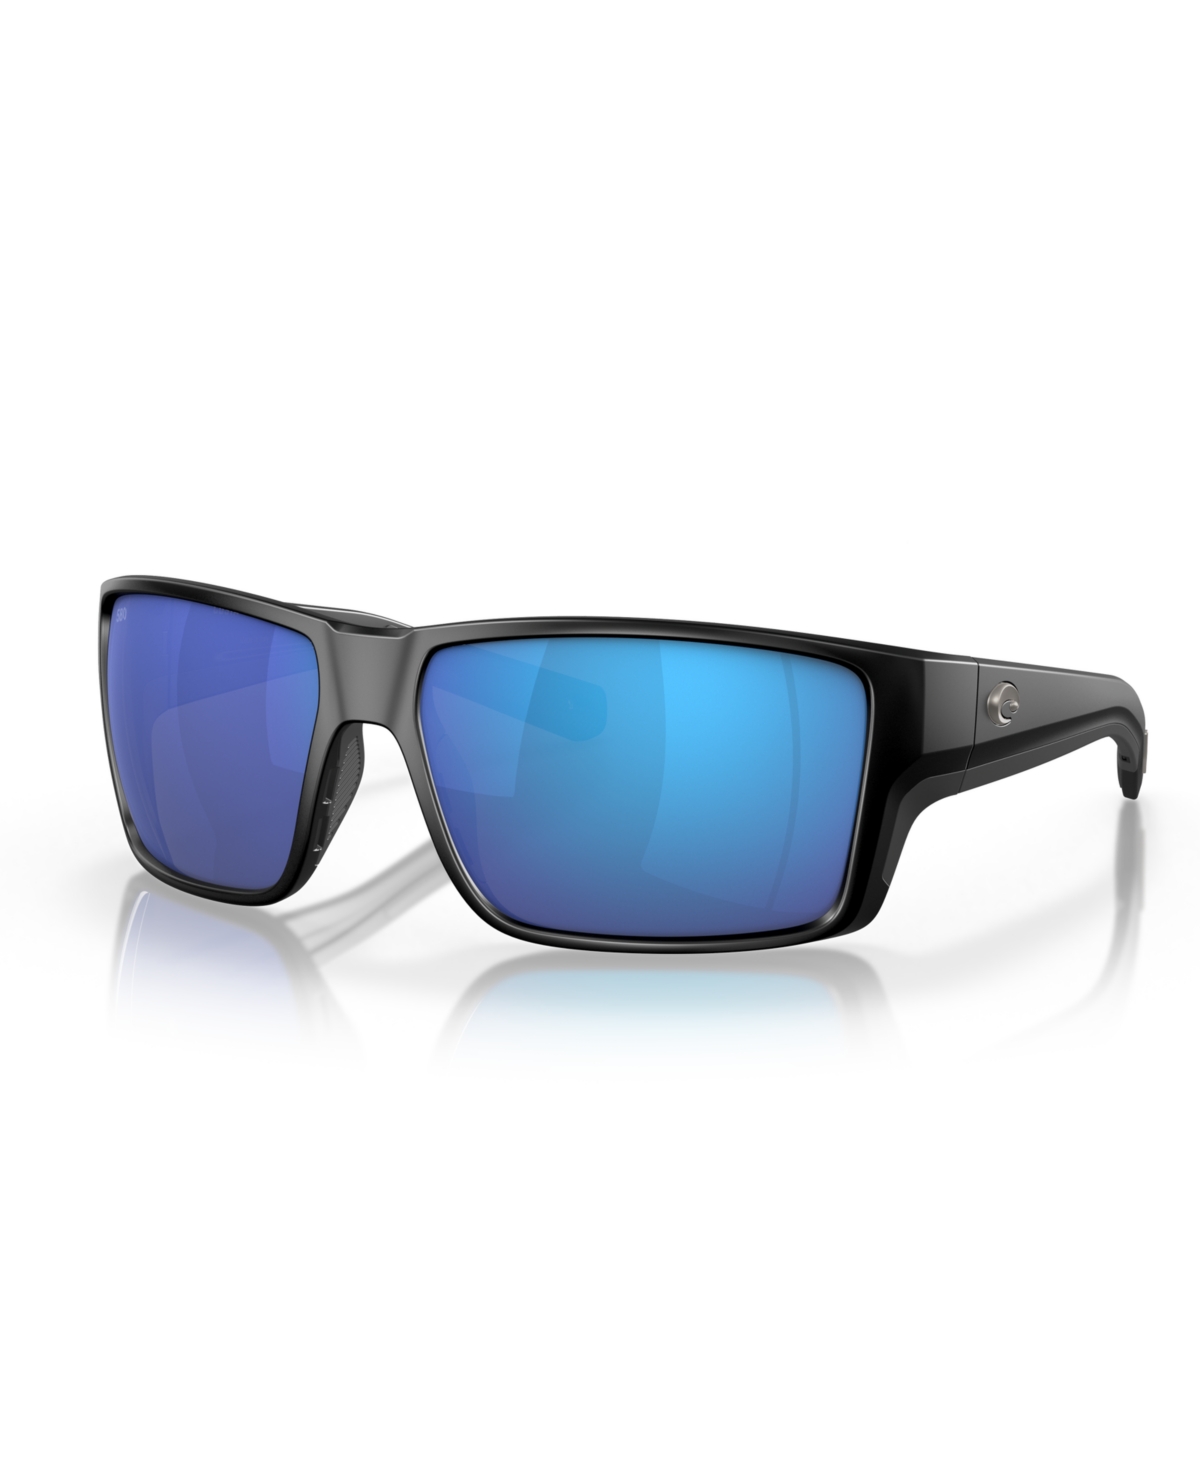 Men's Polarized Sunglasses, Reefton Pro 6S9080 - Matte Black, Silver